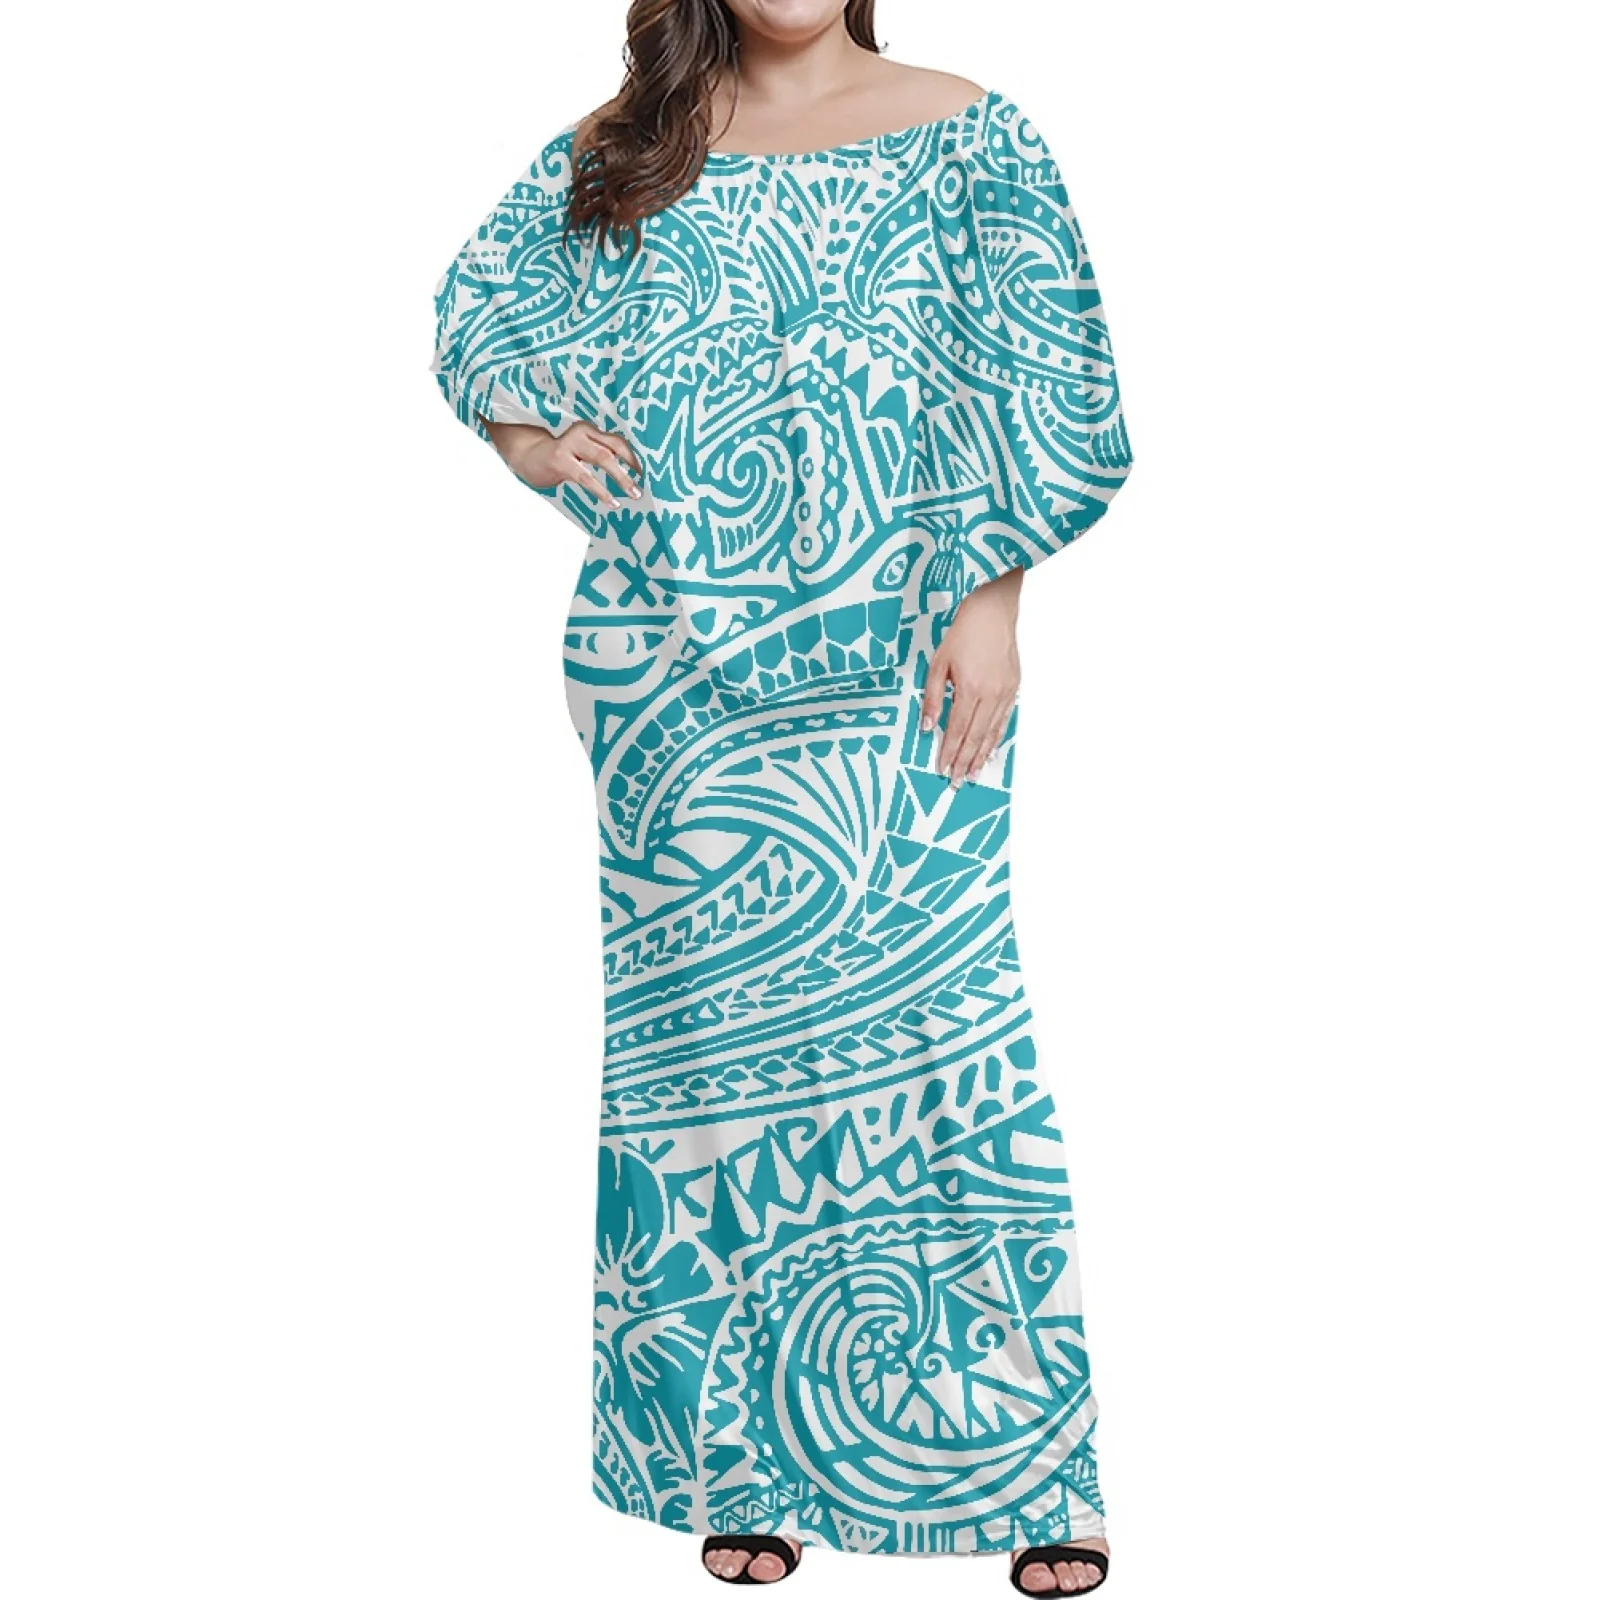 

Hot selling Hawaiian Samoa Fashion Print Women's Off-Shoulder Dress With Lotus Sleeves Thin Women's Sheath Party Dress Summer